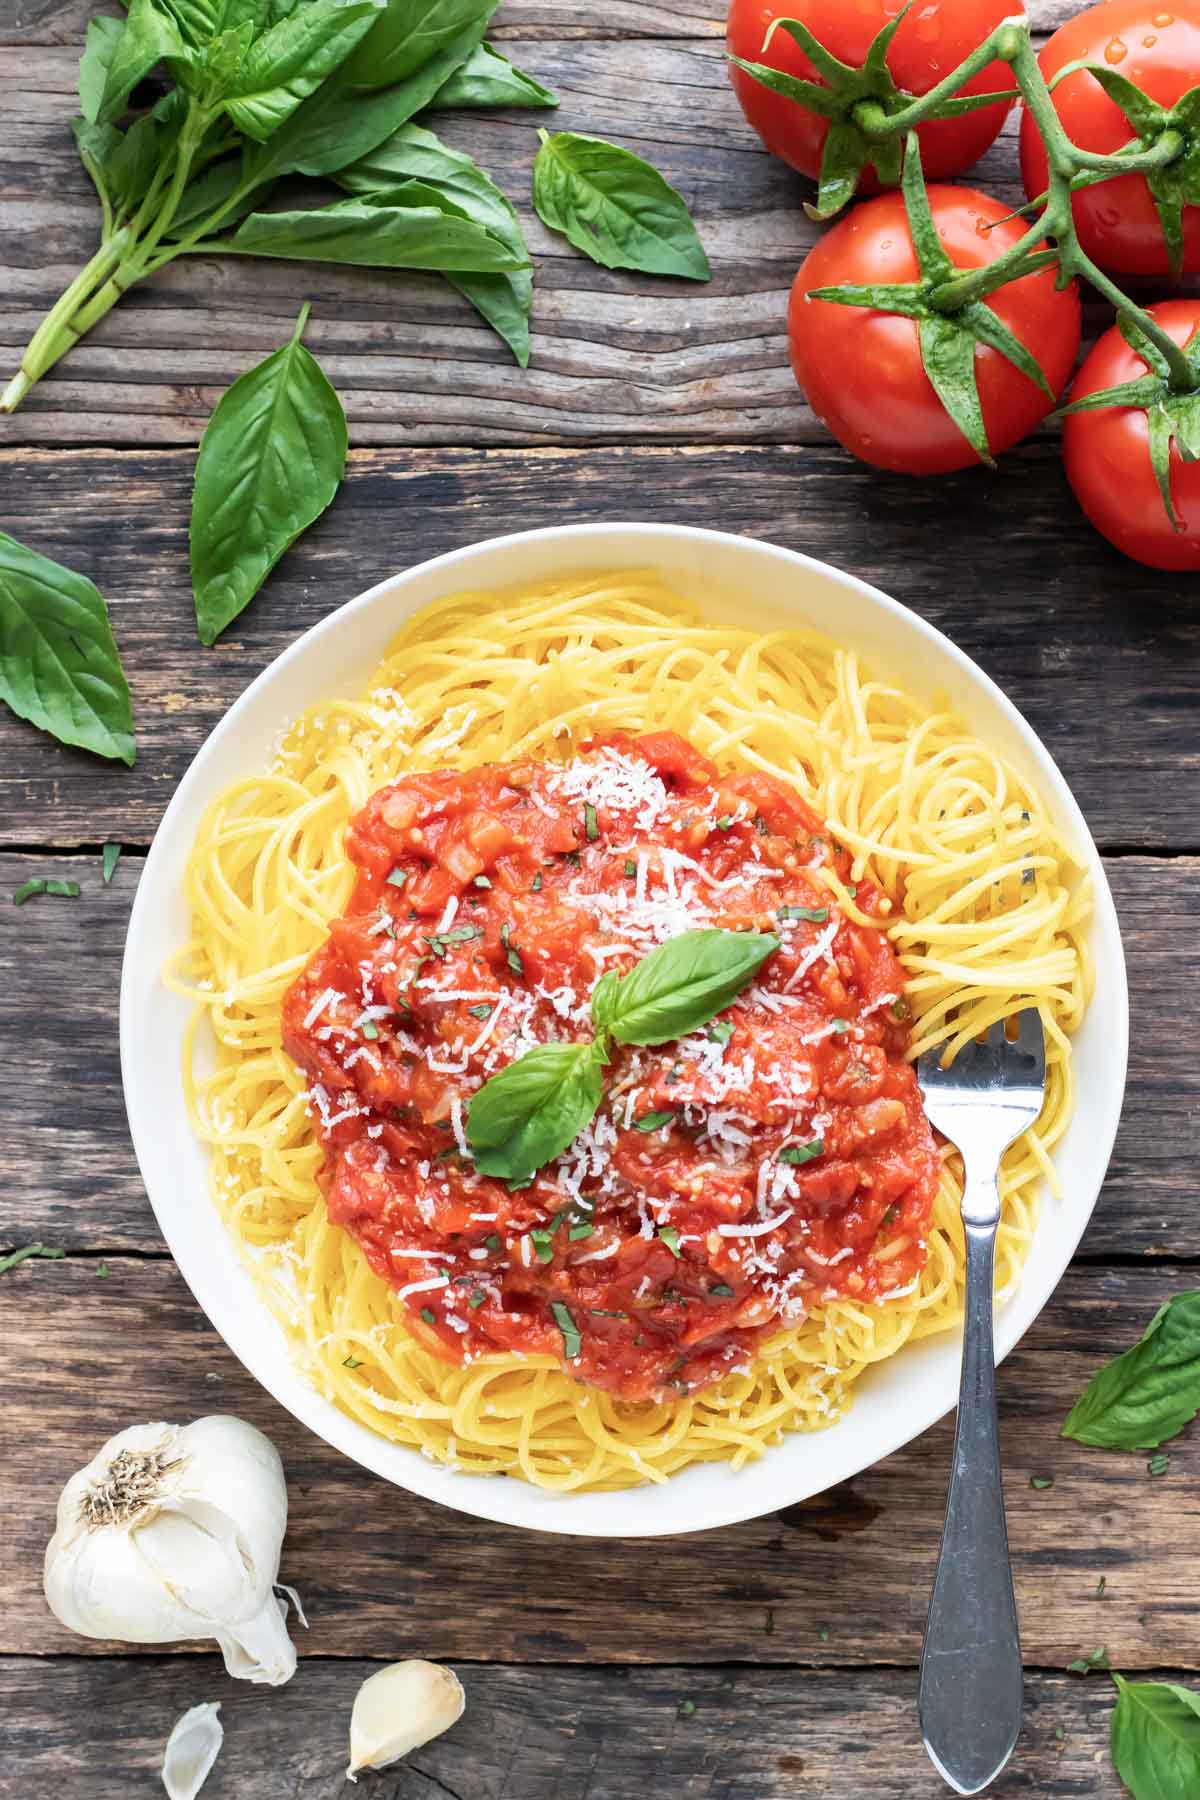 Pomodoro sauce recipe on a bed of gluten-free spaghetti in a white bowl.